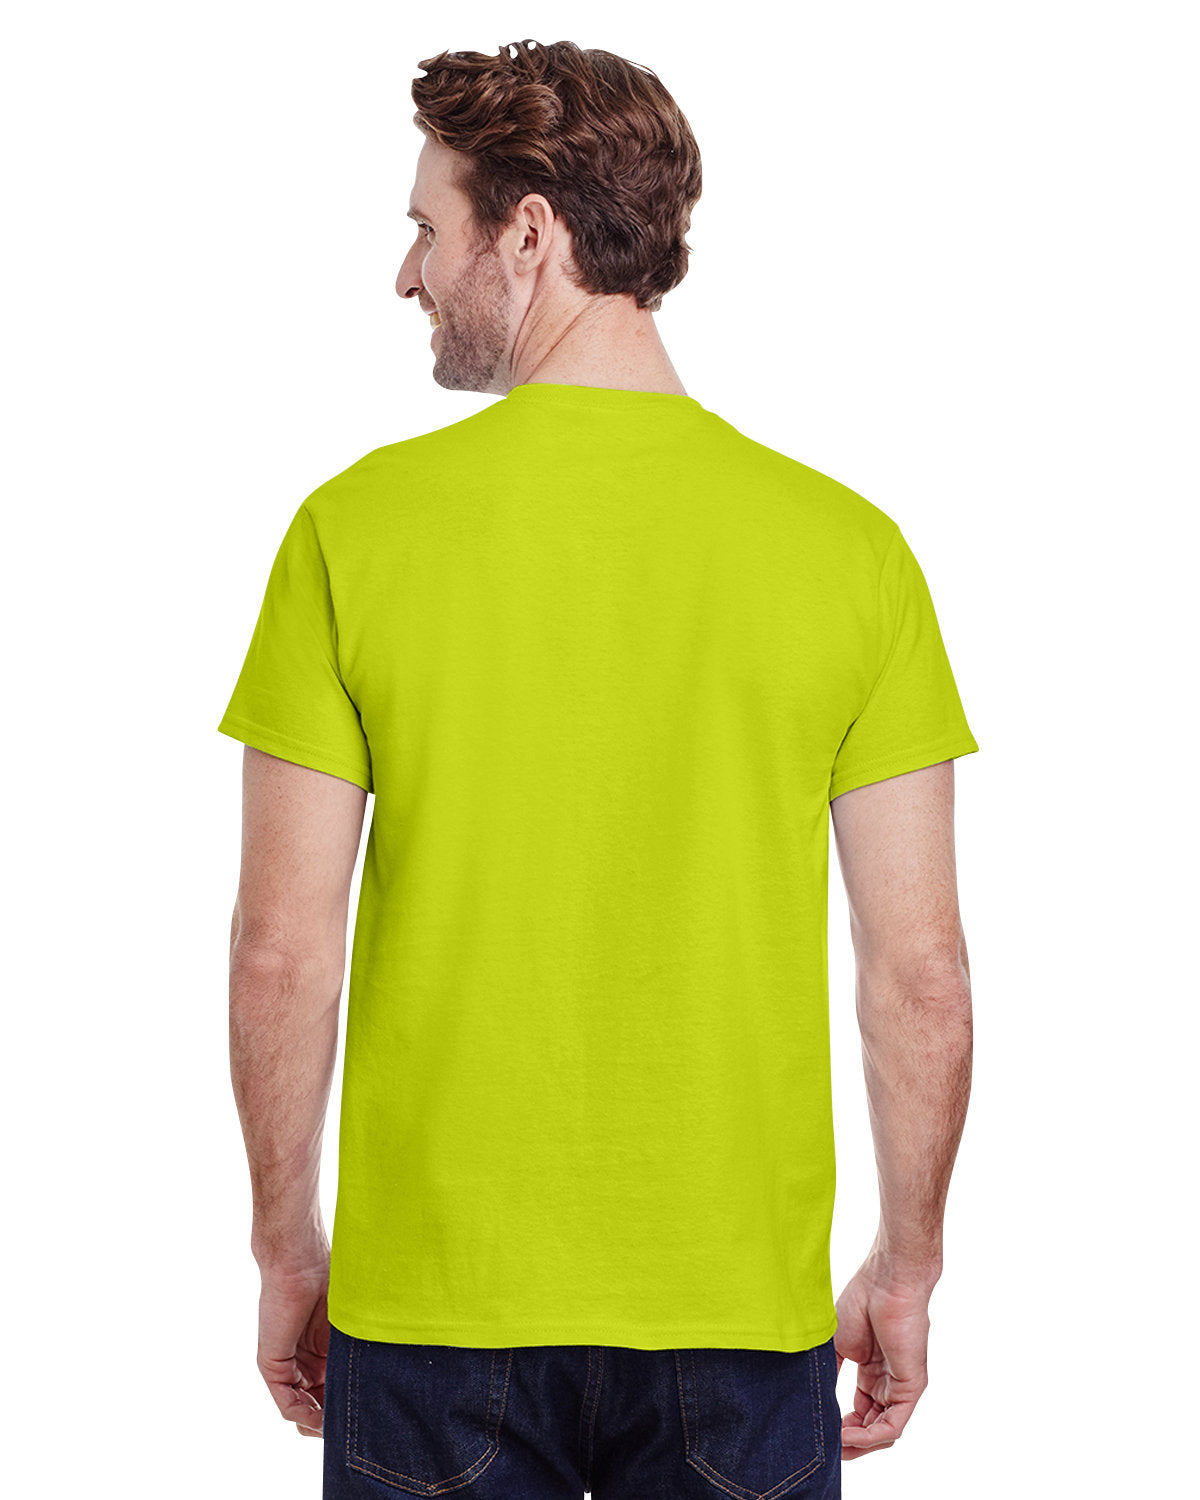 Lot of 5 Gildan Youth Size Medium Kelly Green Short Sleeve Crew Neck  T-Shirt New